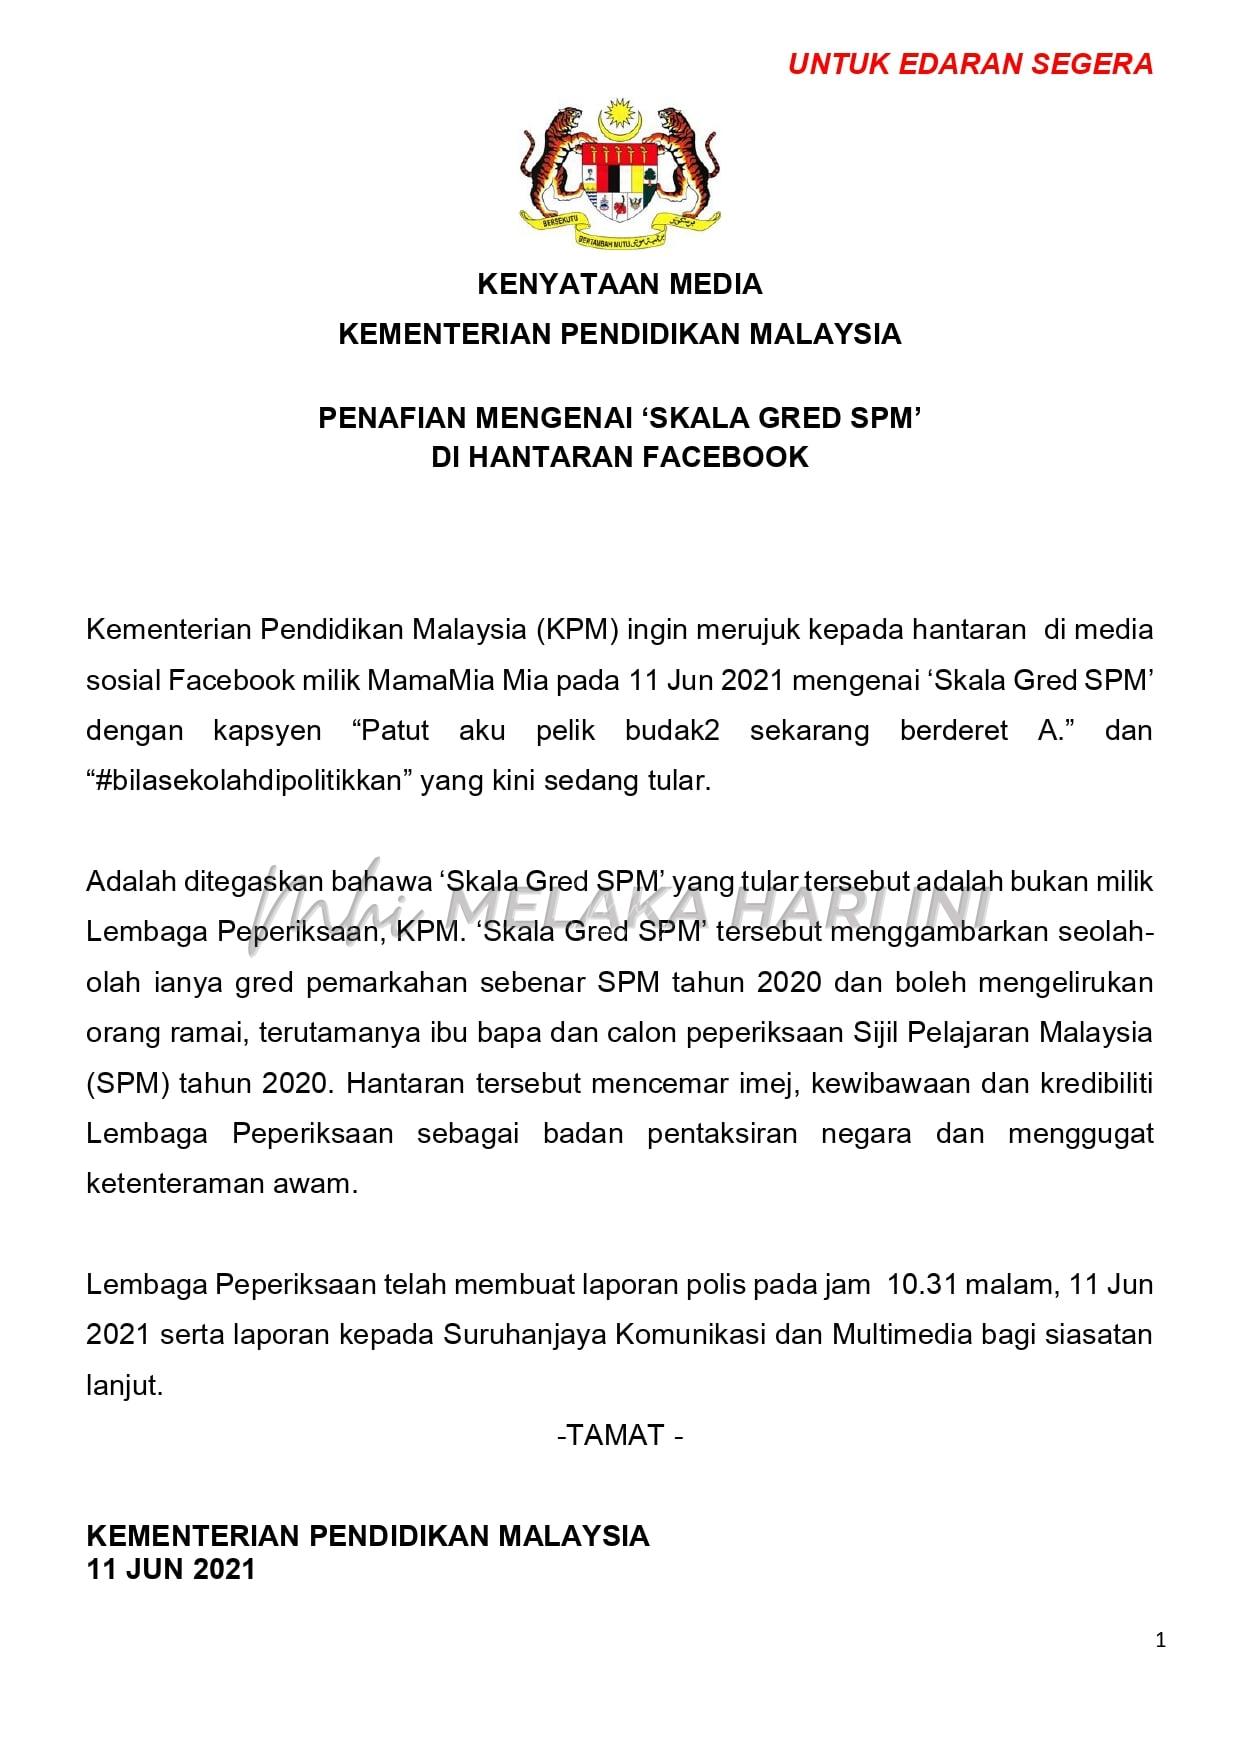 KPM nafi skala gred SPM tular milik Lembaga Peperiksaan